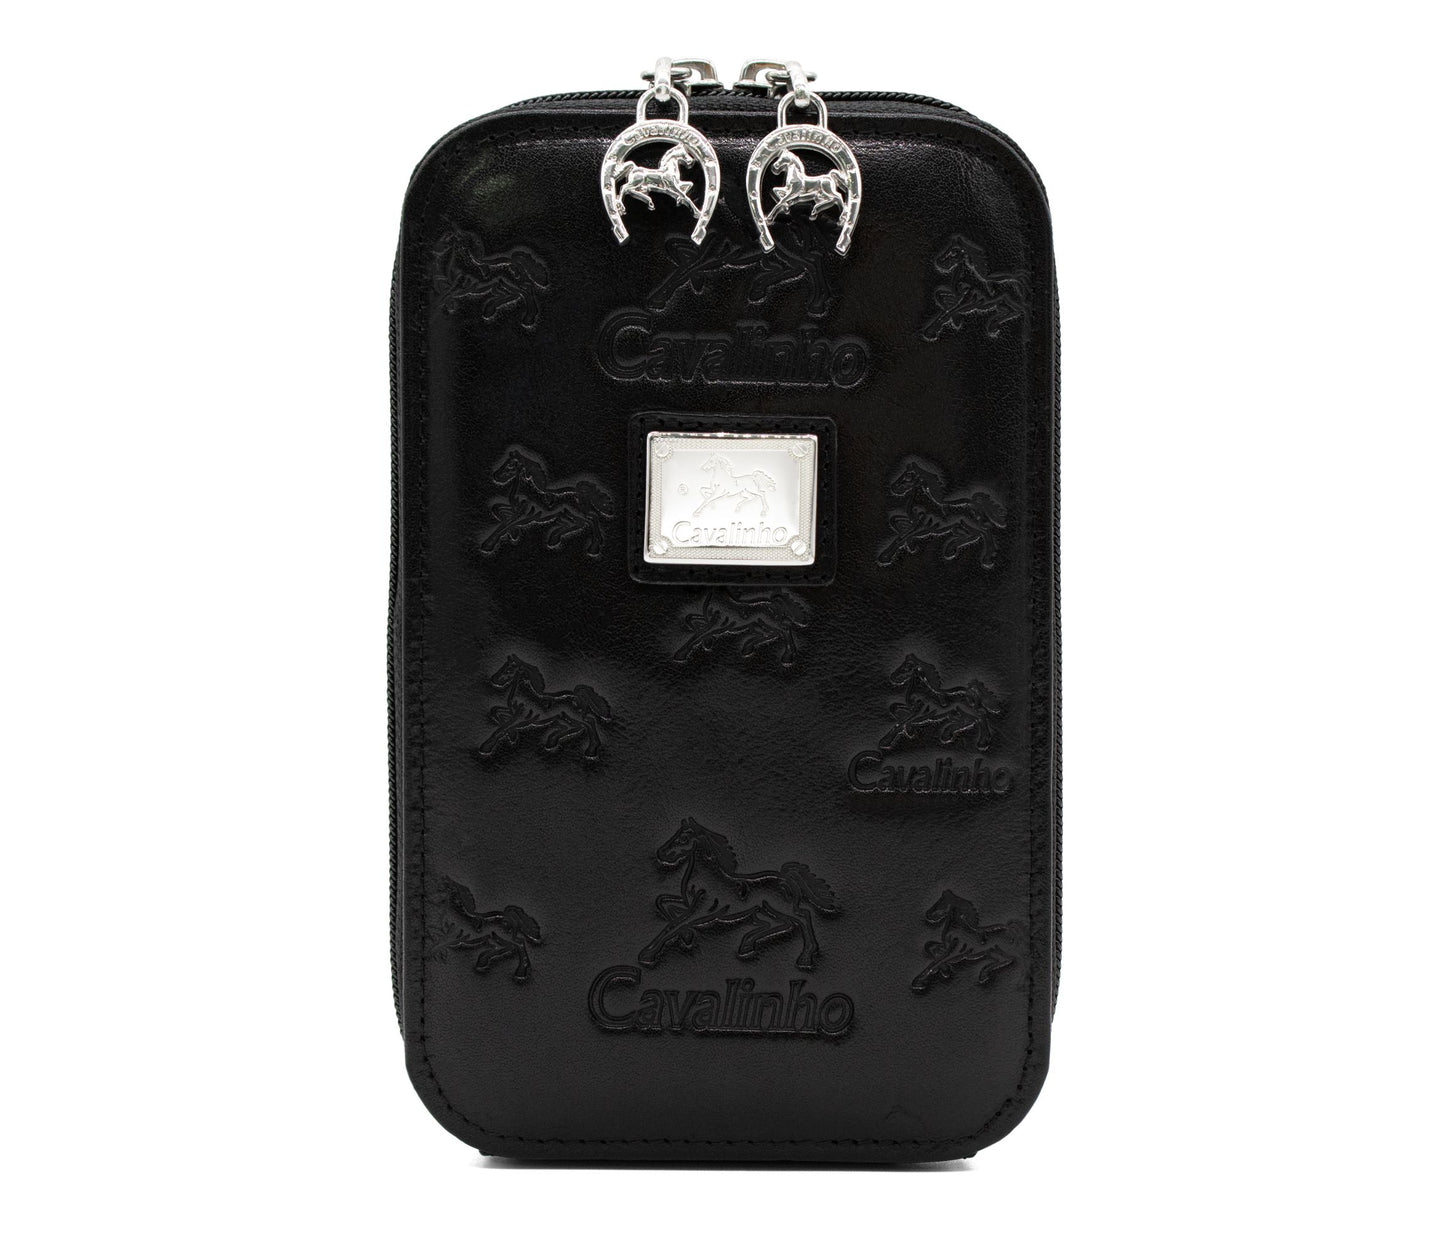 Cavalinho Cavalo Lusitano Leather Phone Purse - Black - 28090278.01_1